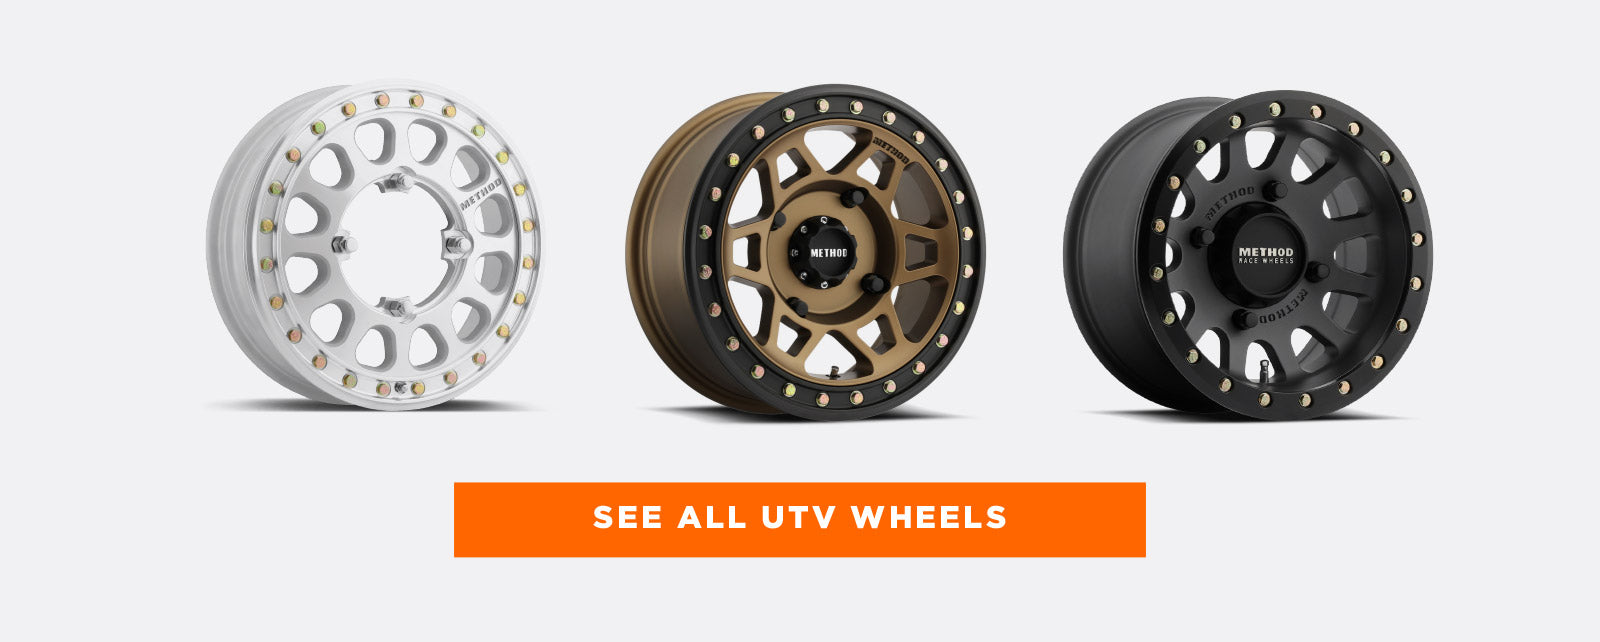 Method Race Wheels UTV Wheels